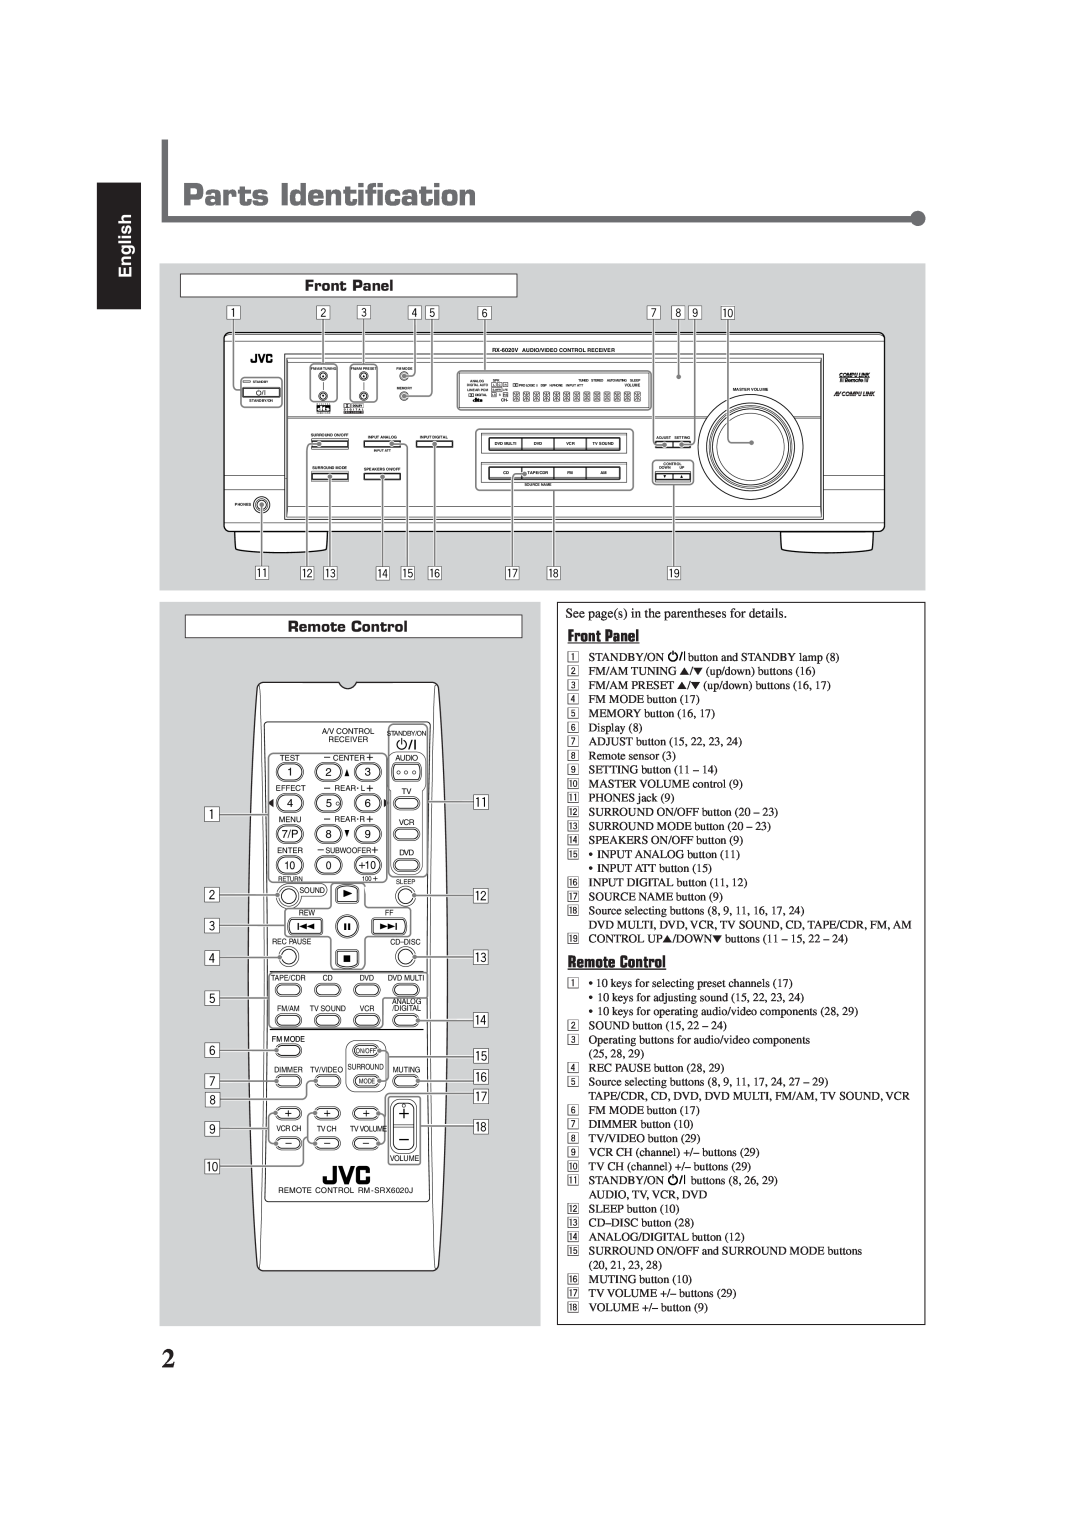 JVC RX-6020VBK manual Parts Identification, Front Panel, English 